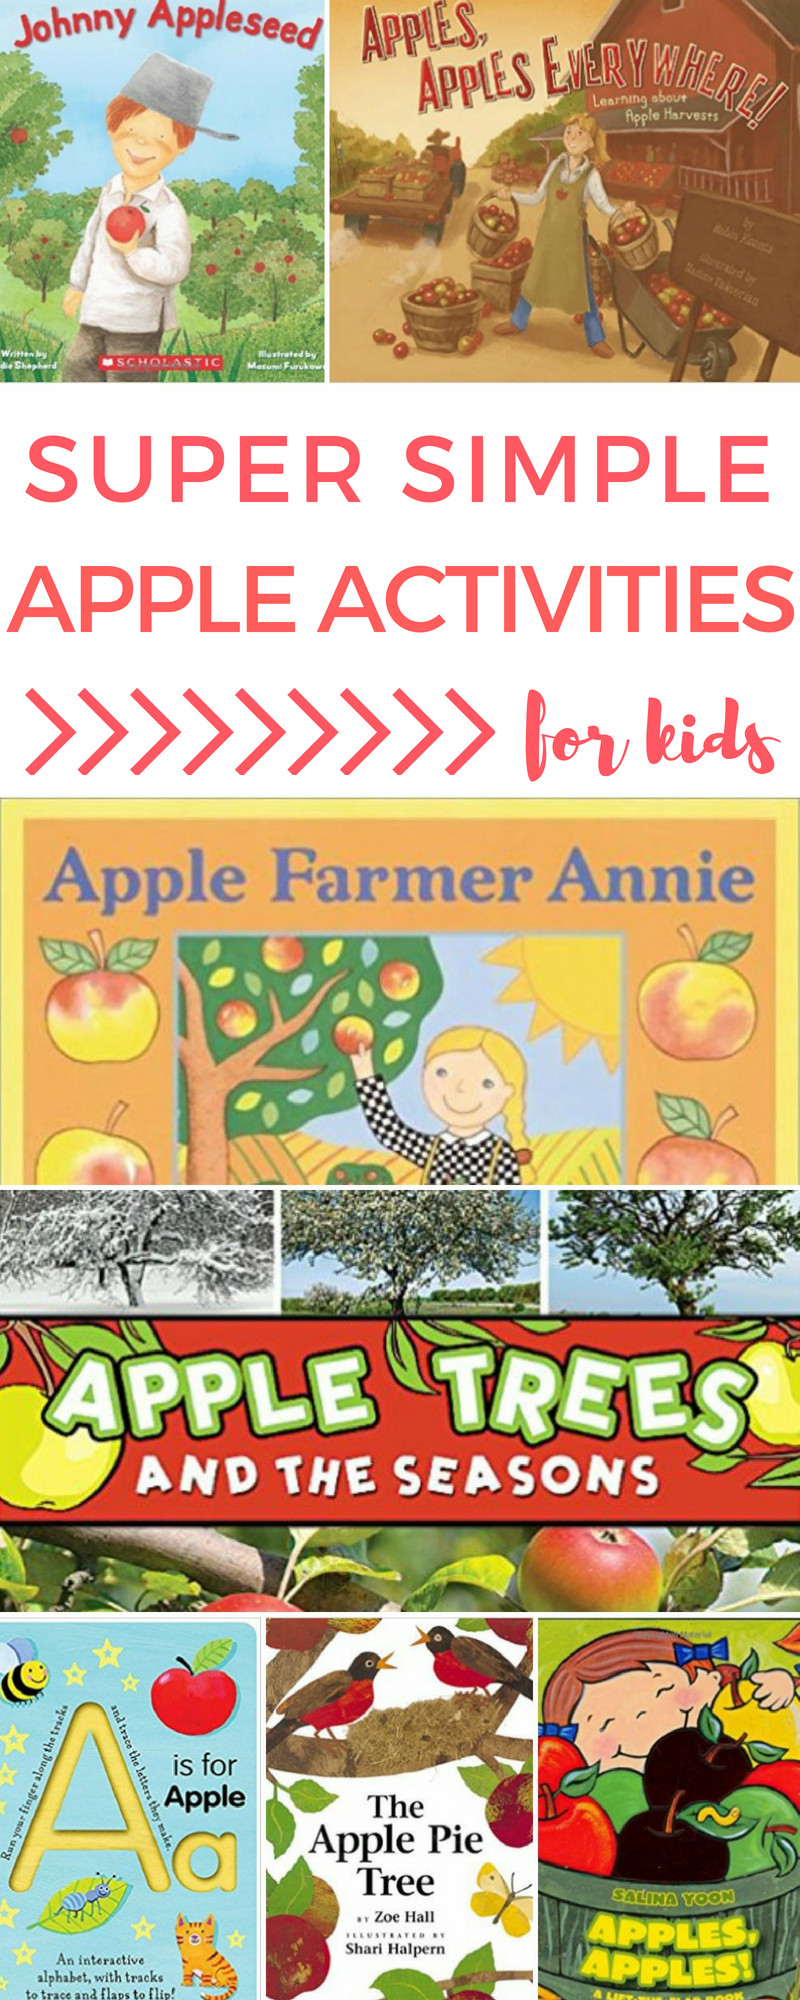 Super Simple Apple Activities for Kids